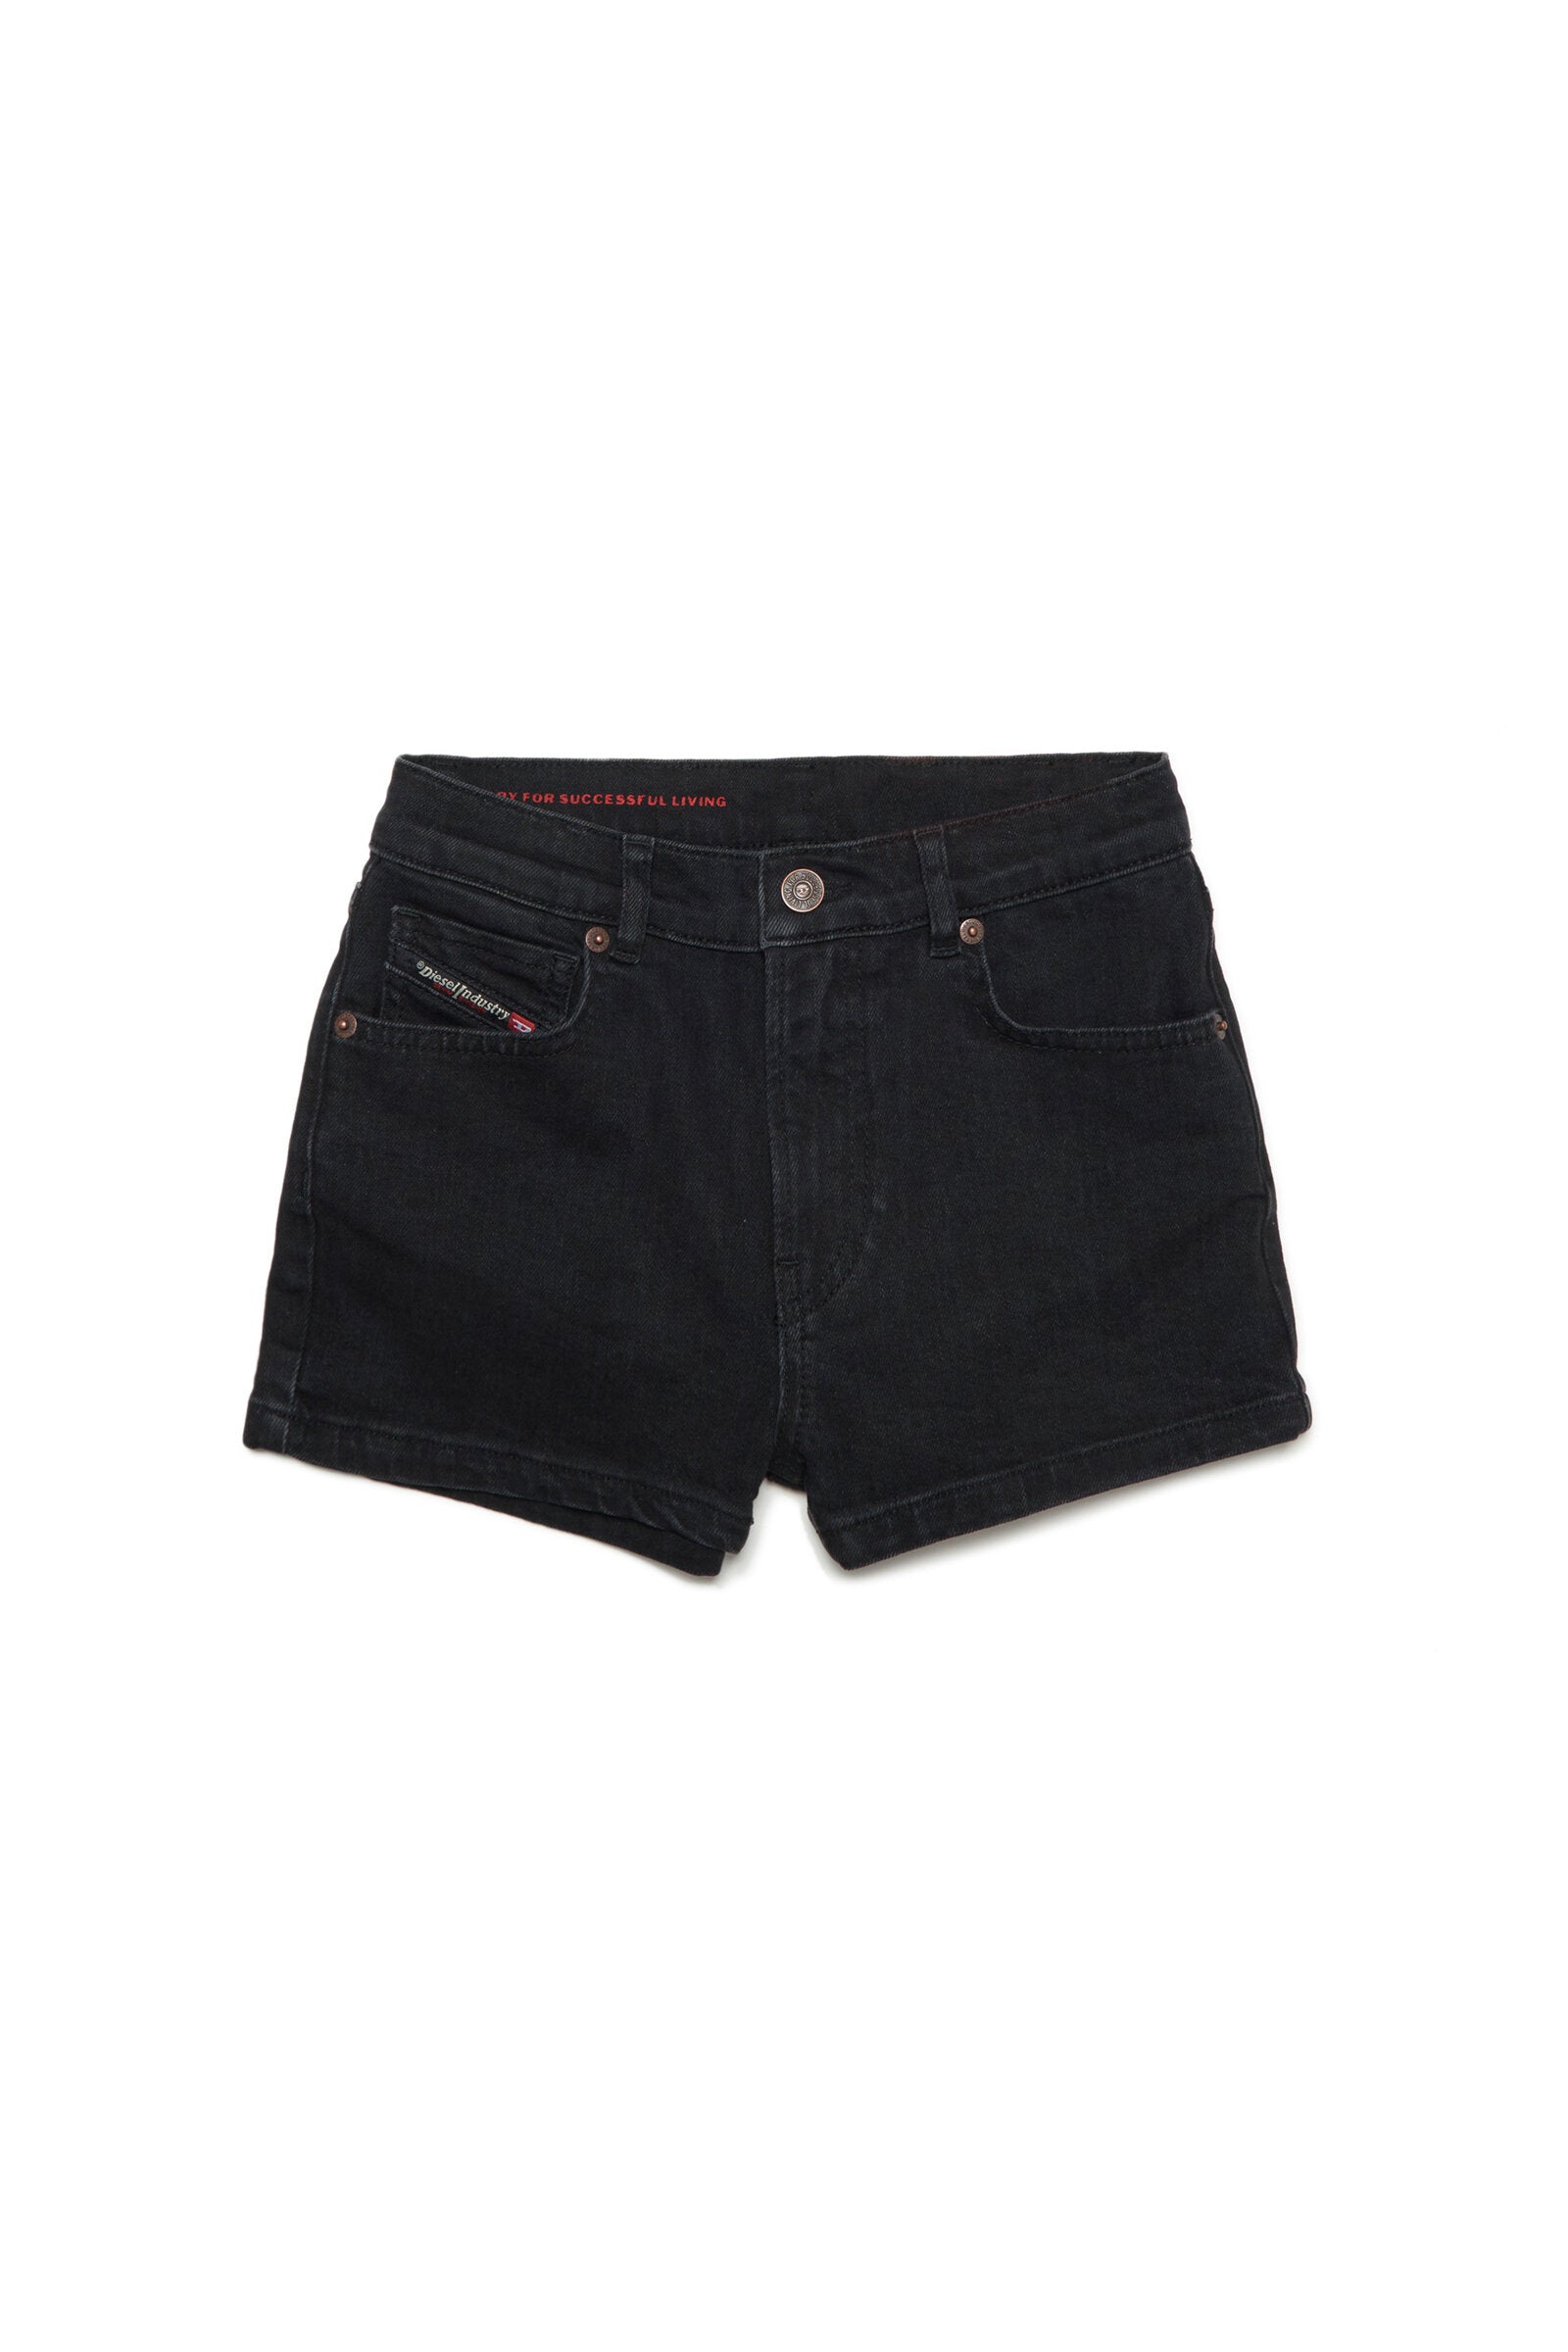 Black denim shorts with 5 pockets pattern